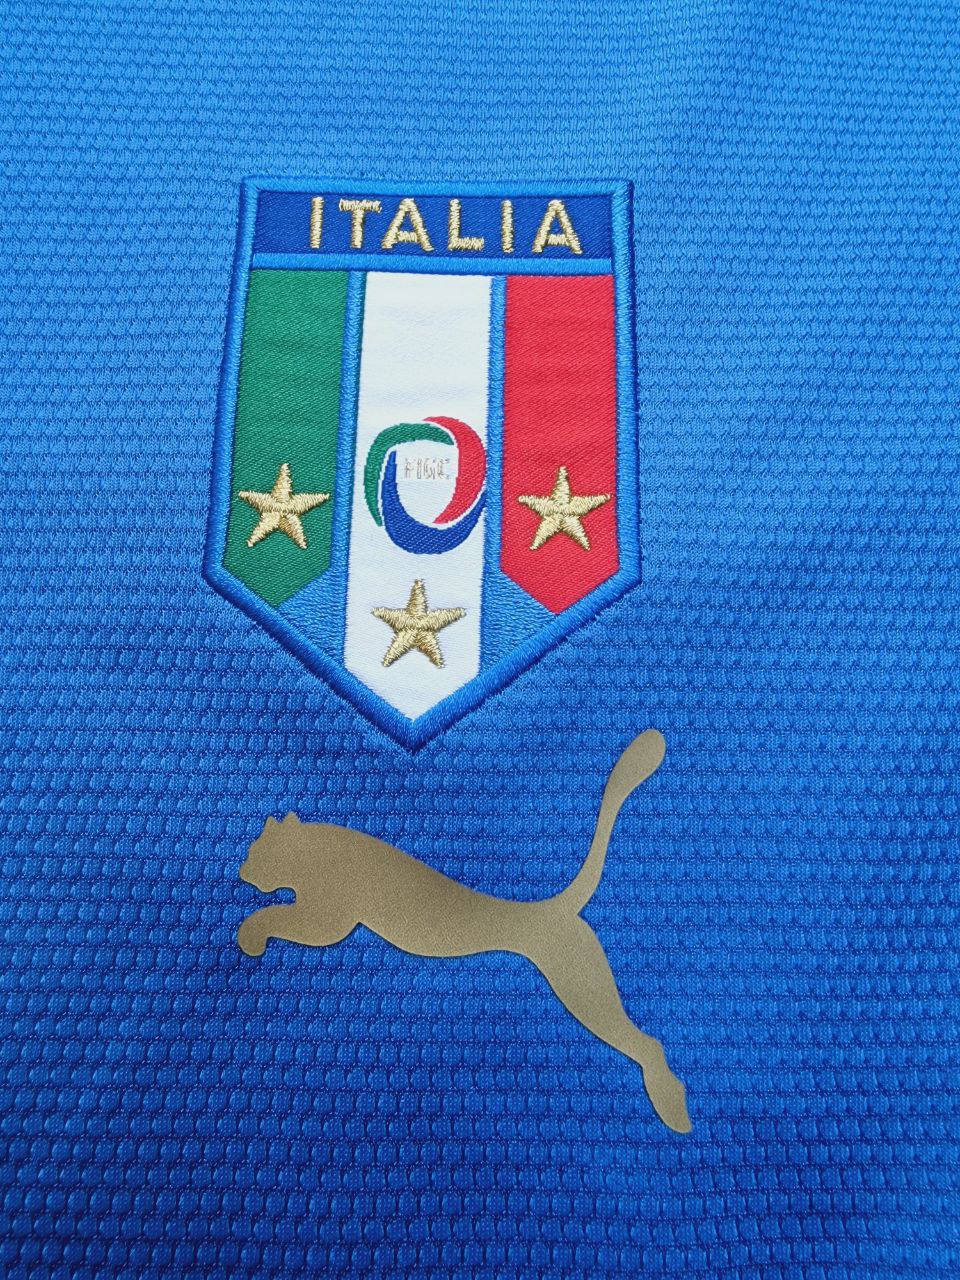 2006 World Cup Francesco Totti Italien Retro-Trikot Maillot Trikot Maglia